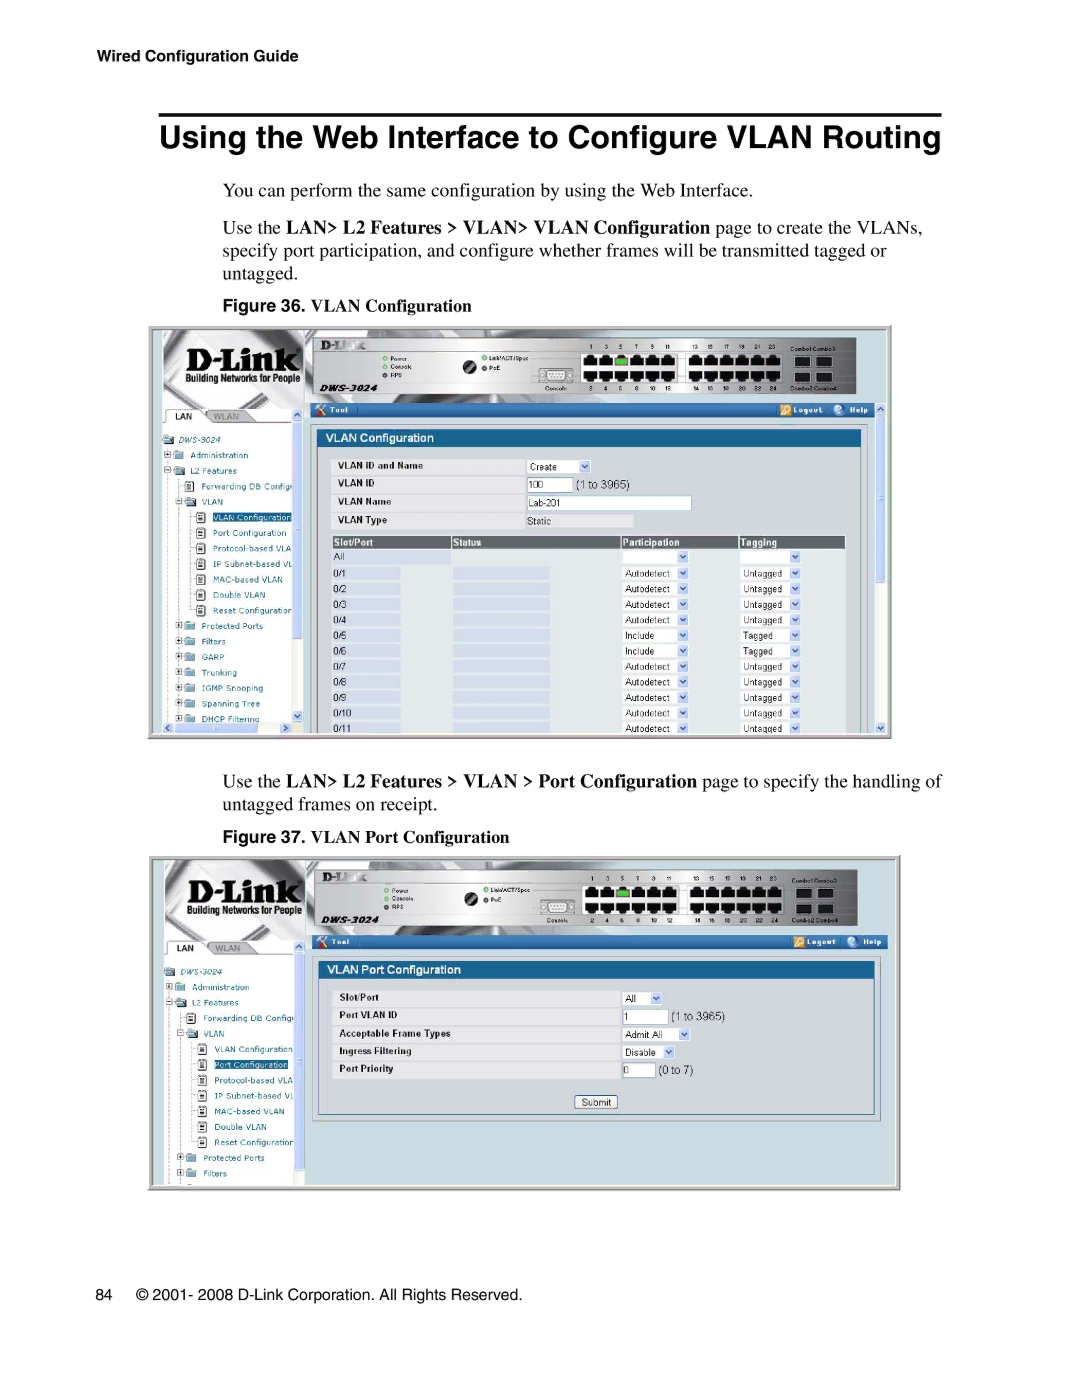 D-Link DWS-3000 manual Using the Web Interface to Configure Vlan Routing, Vlan Configuration 